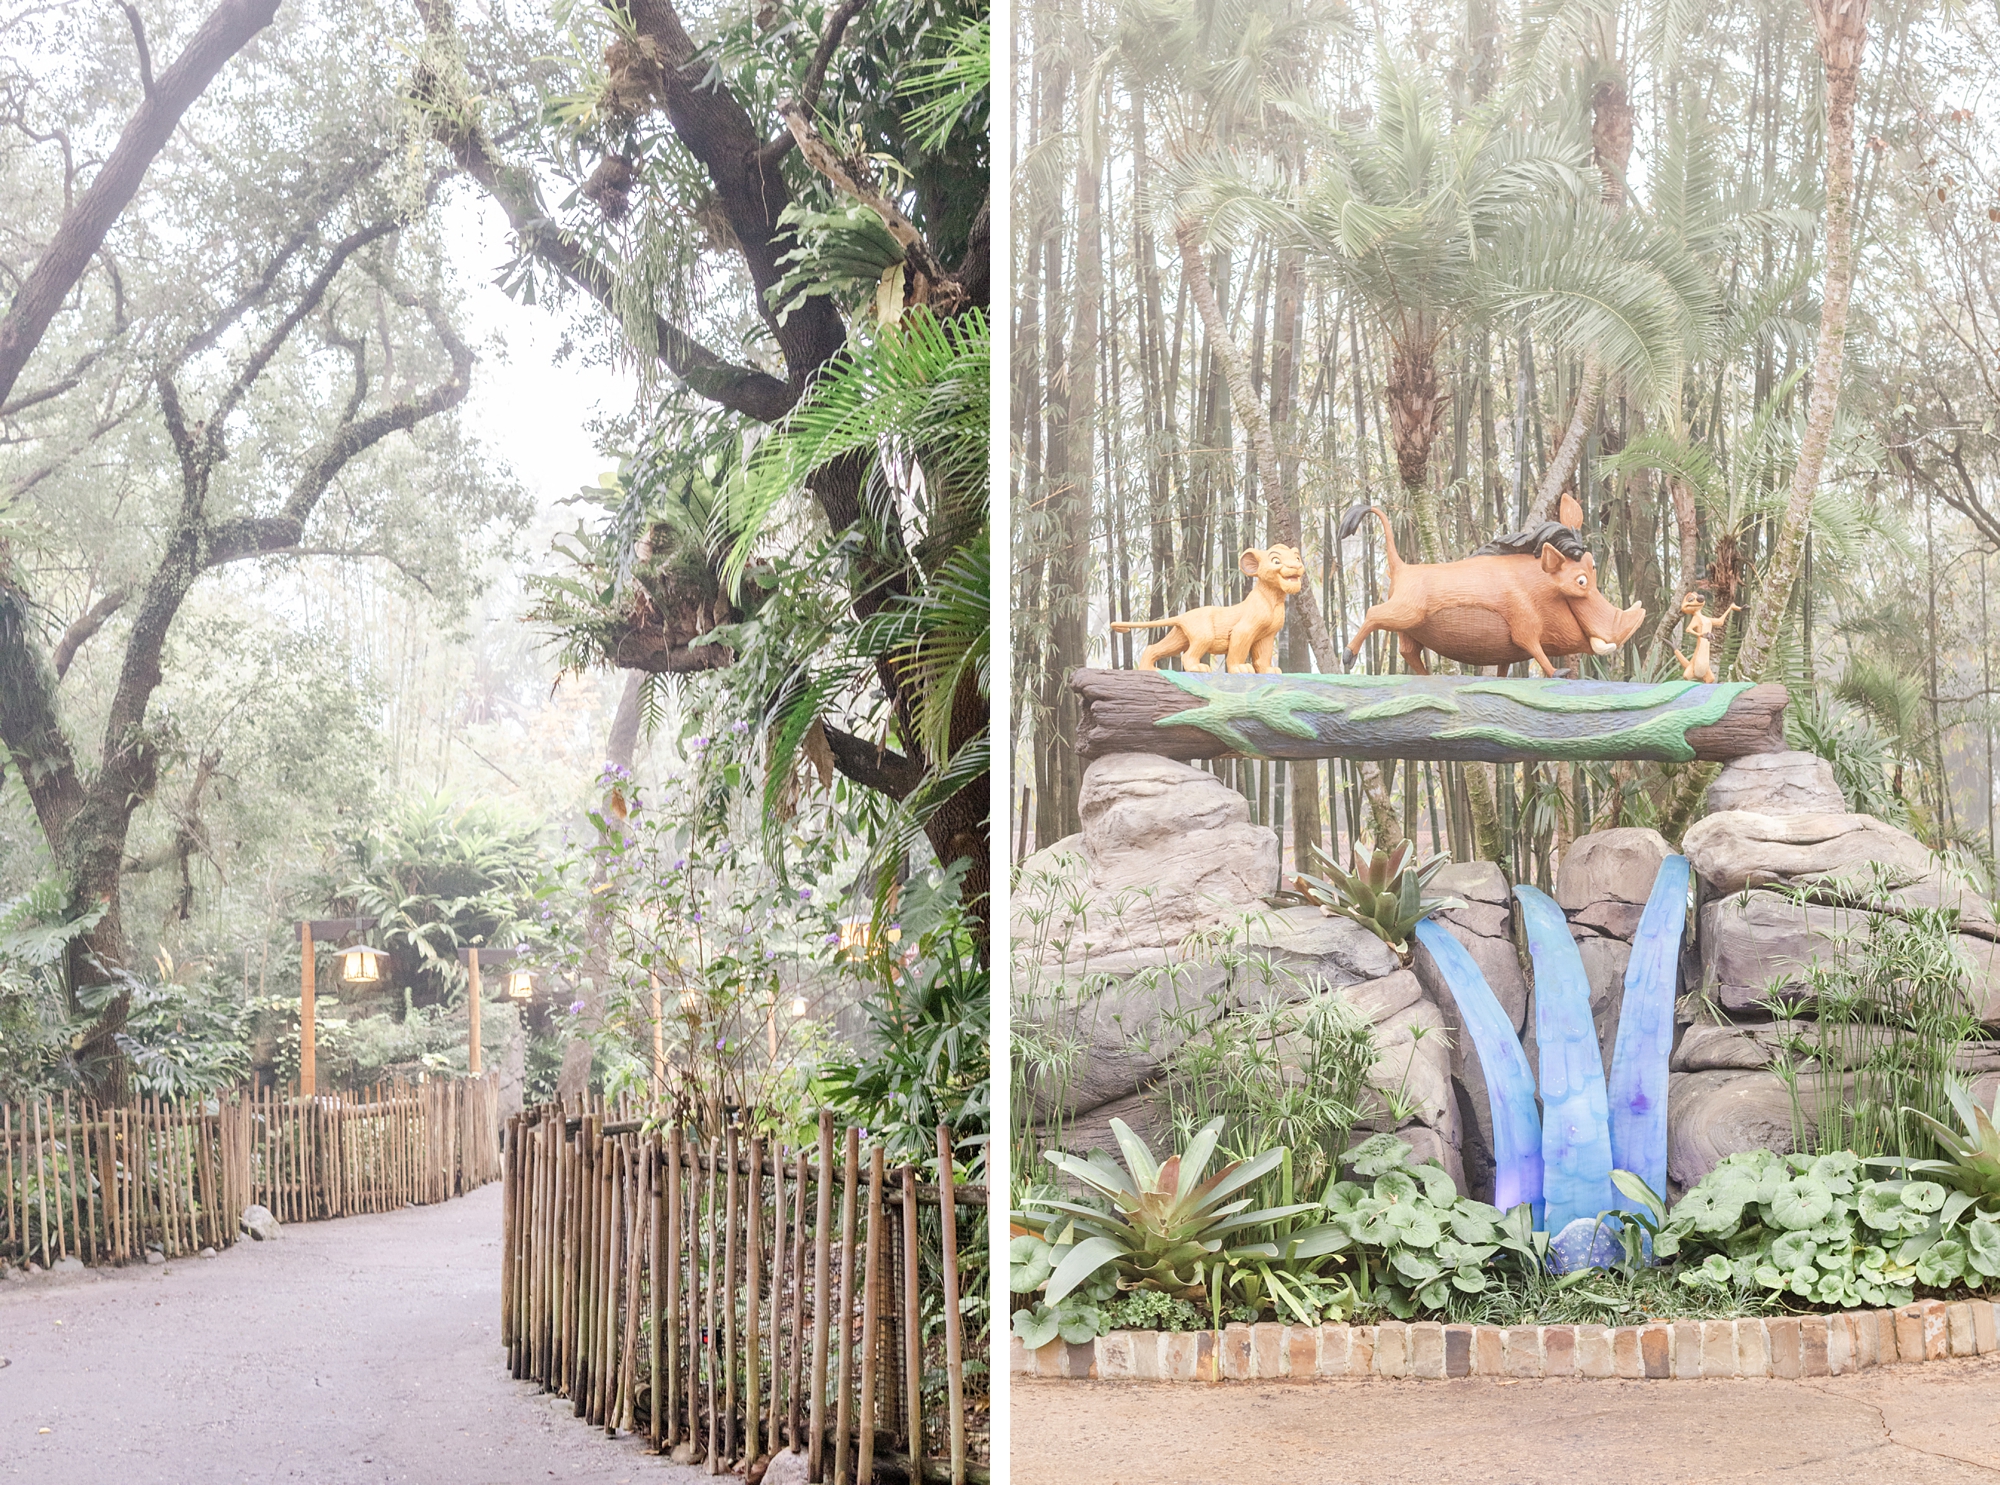 Animal Kingdom decorations at Walt Disney World